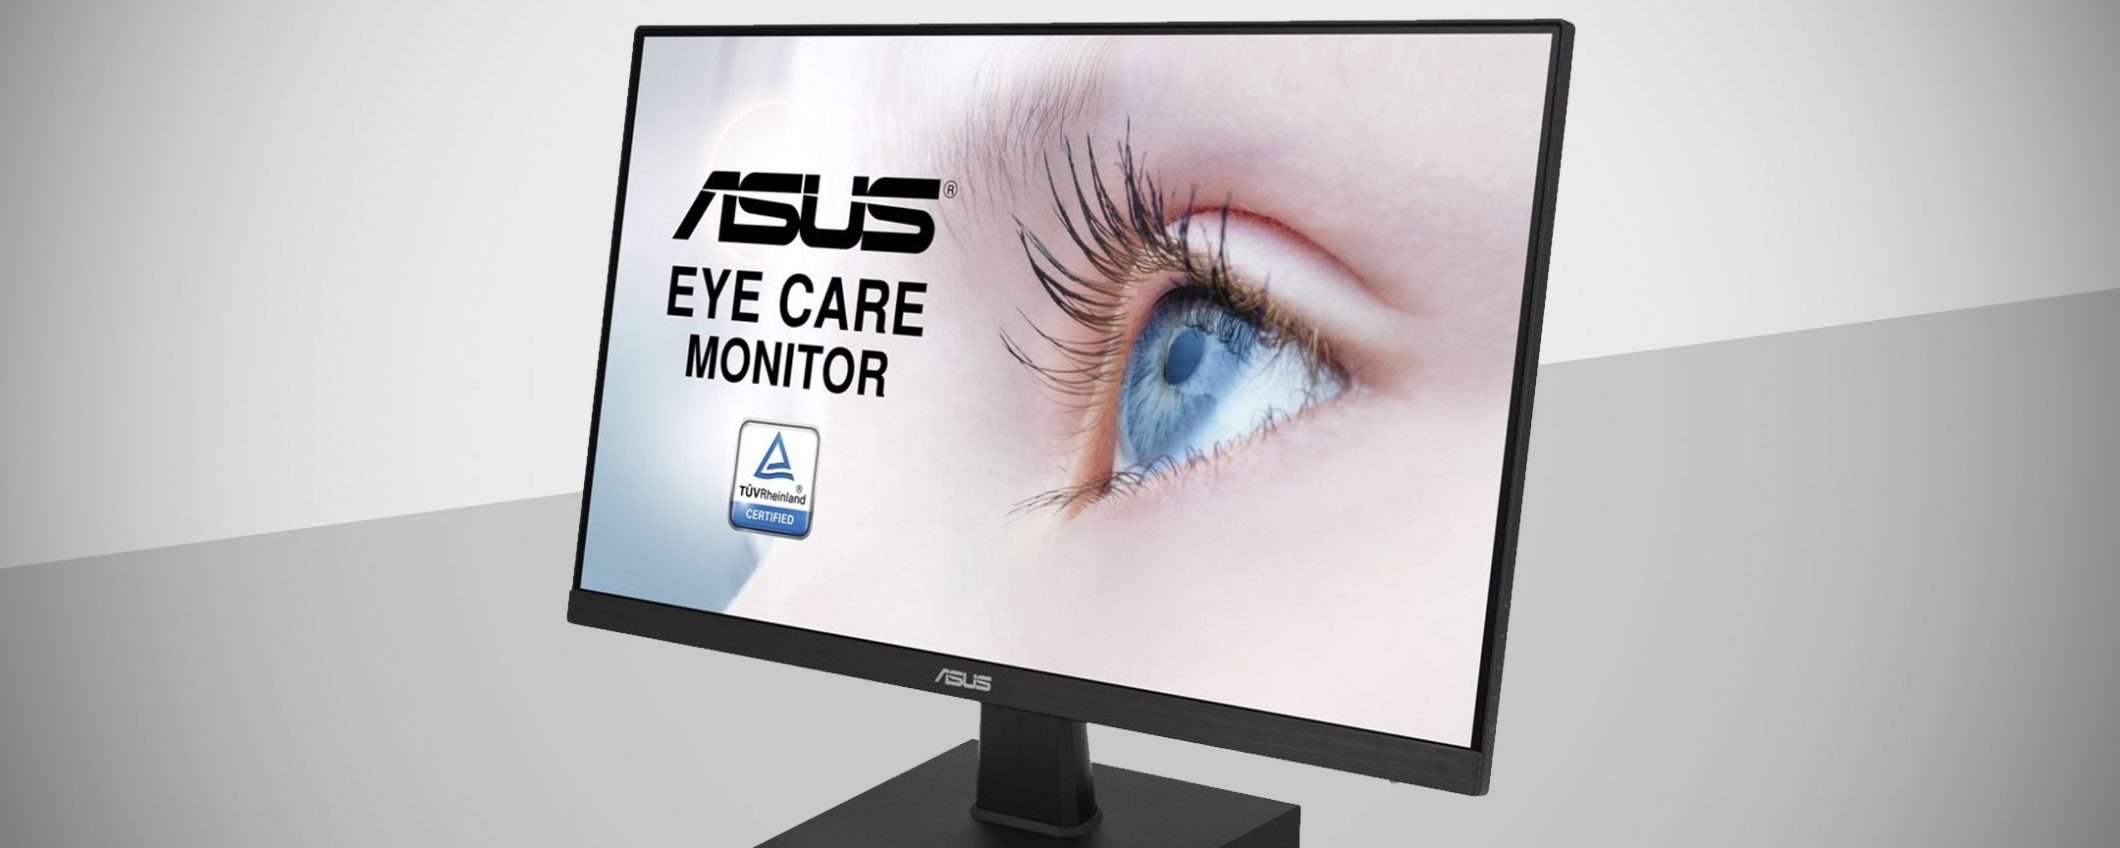 Offerte eBay: monitor ASUS da 23,8 pollici Full HD